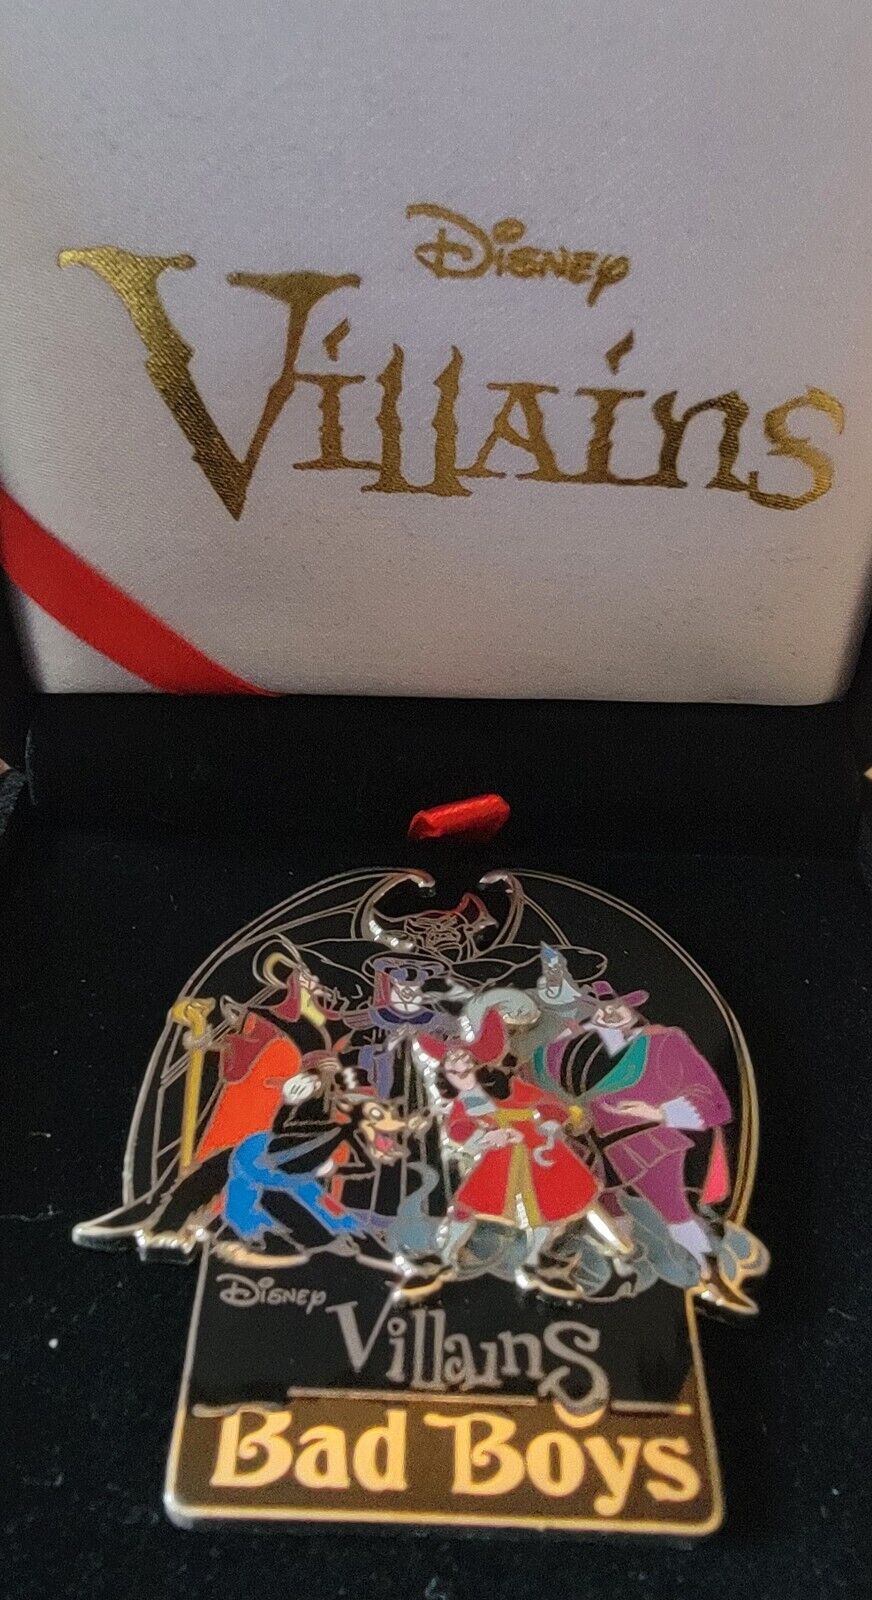 Disney Villains Bad Boys & Bad Girls Pins * Brand New in Original Boxes